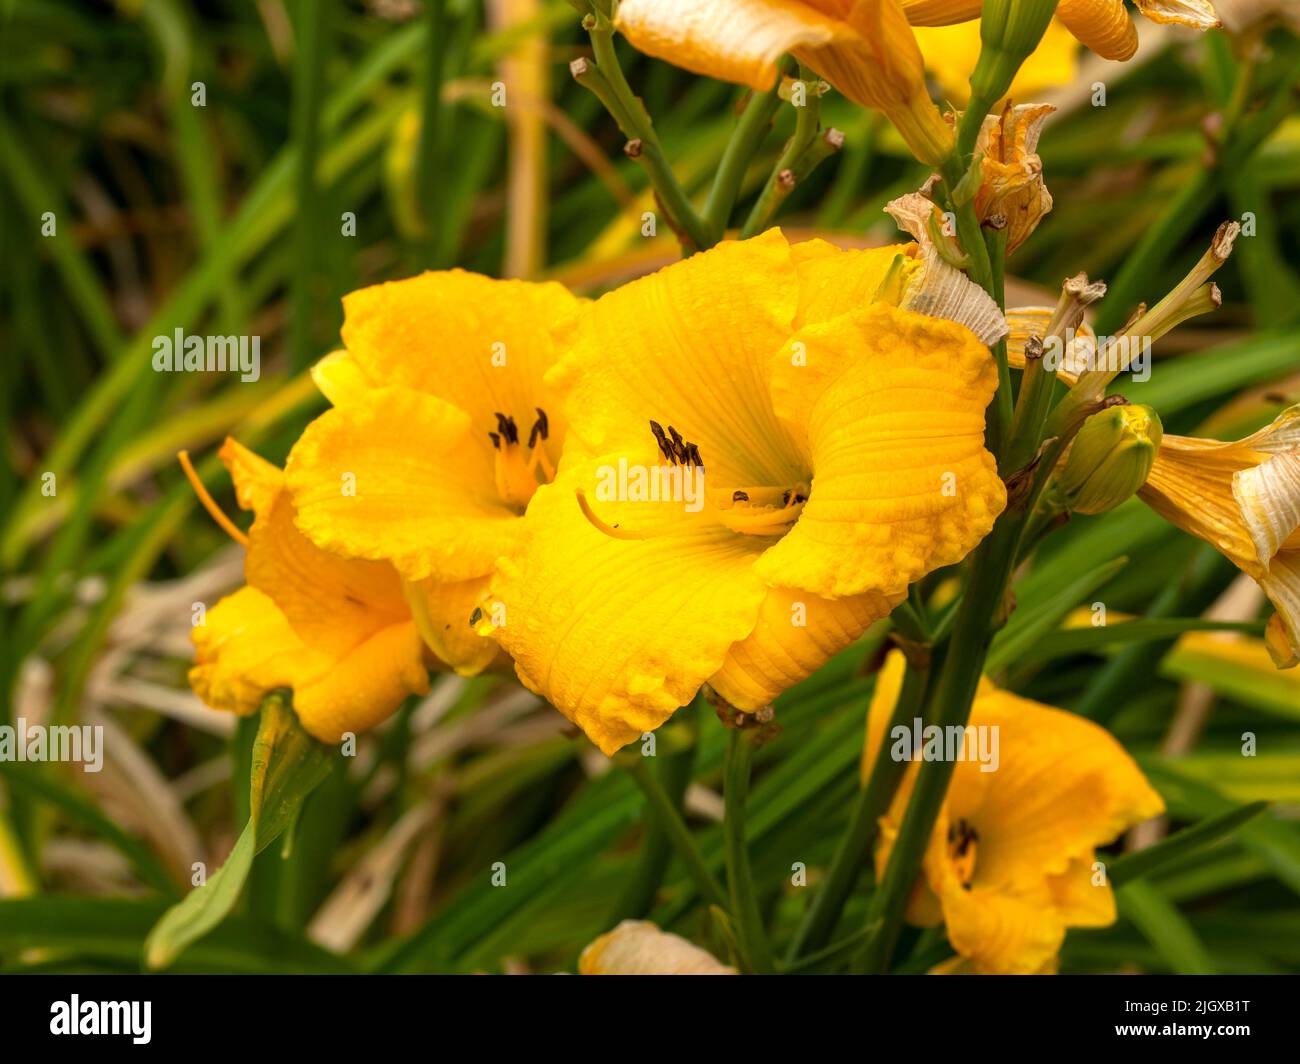 Yellow Hemerocallis daylily variety Bakabana flowering in a garden Stock Photo